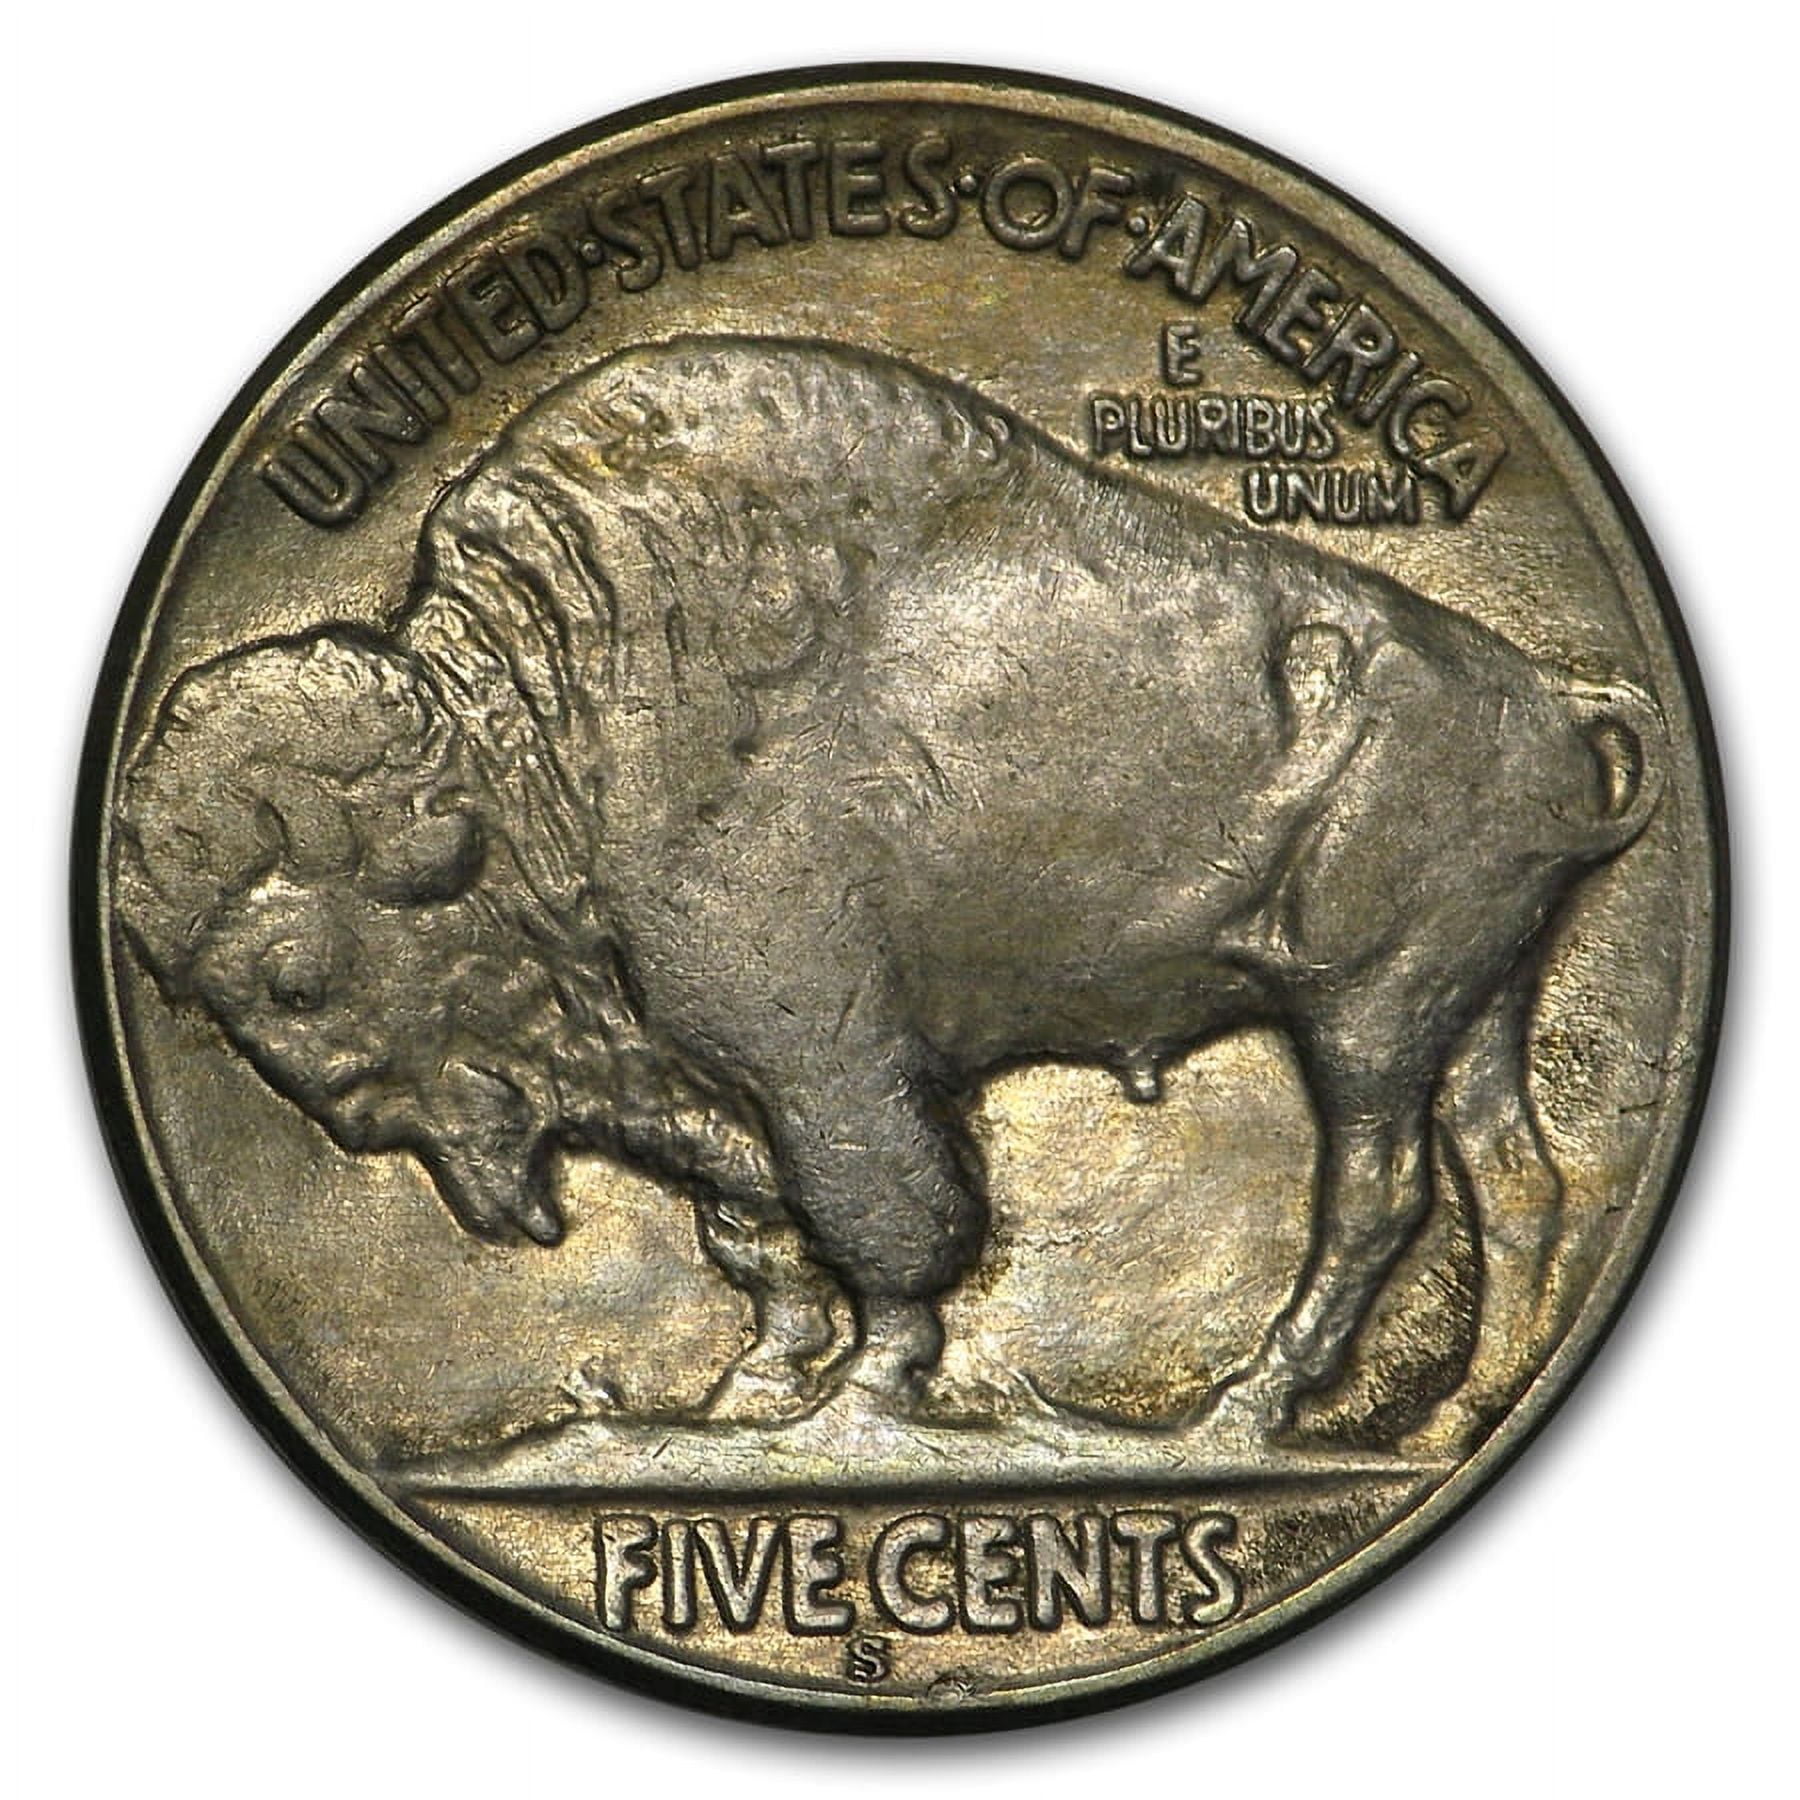 1920-1929 Quarter-Pound Bag of Buffalo Nickels